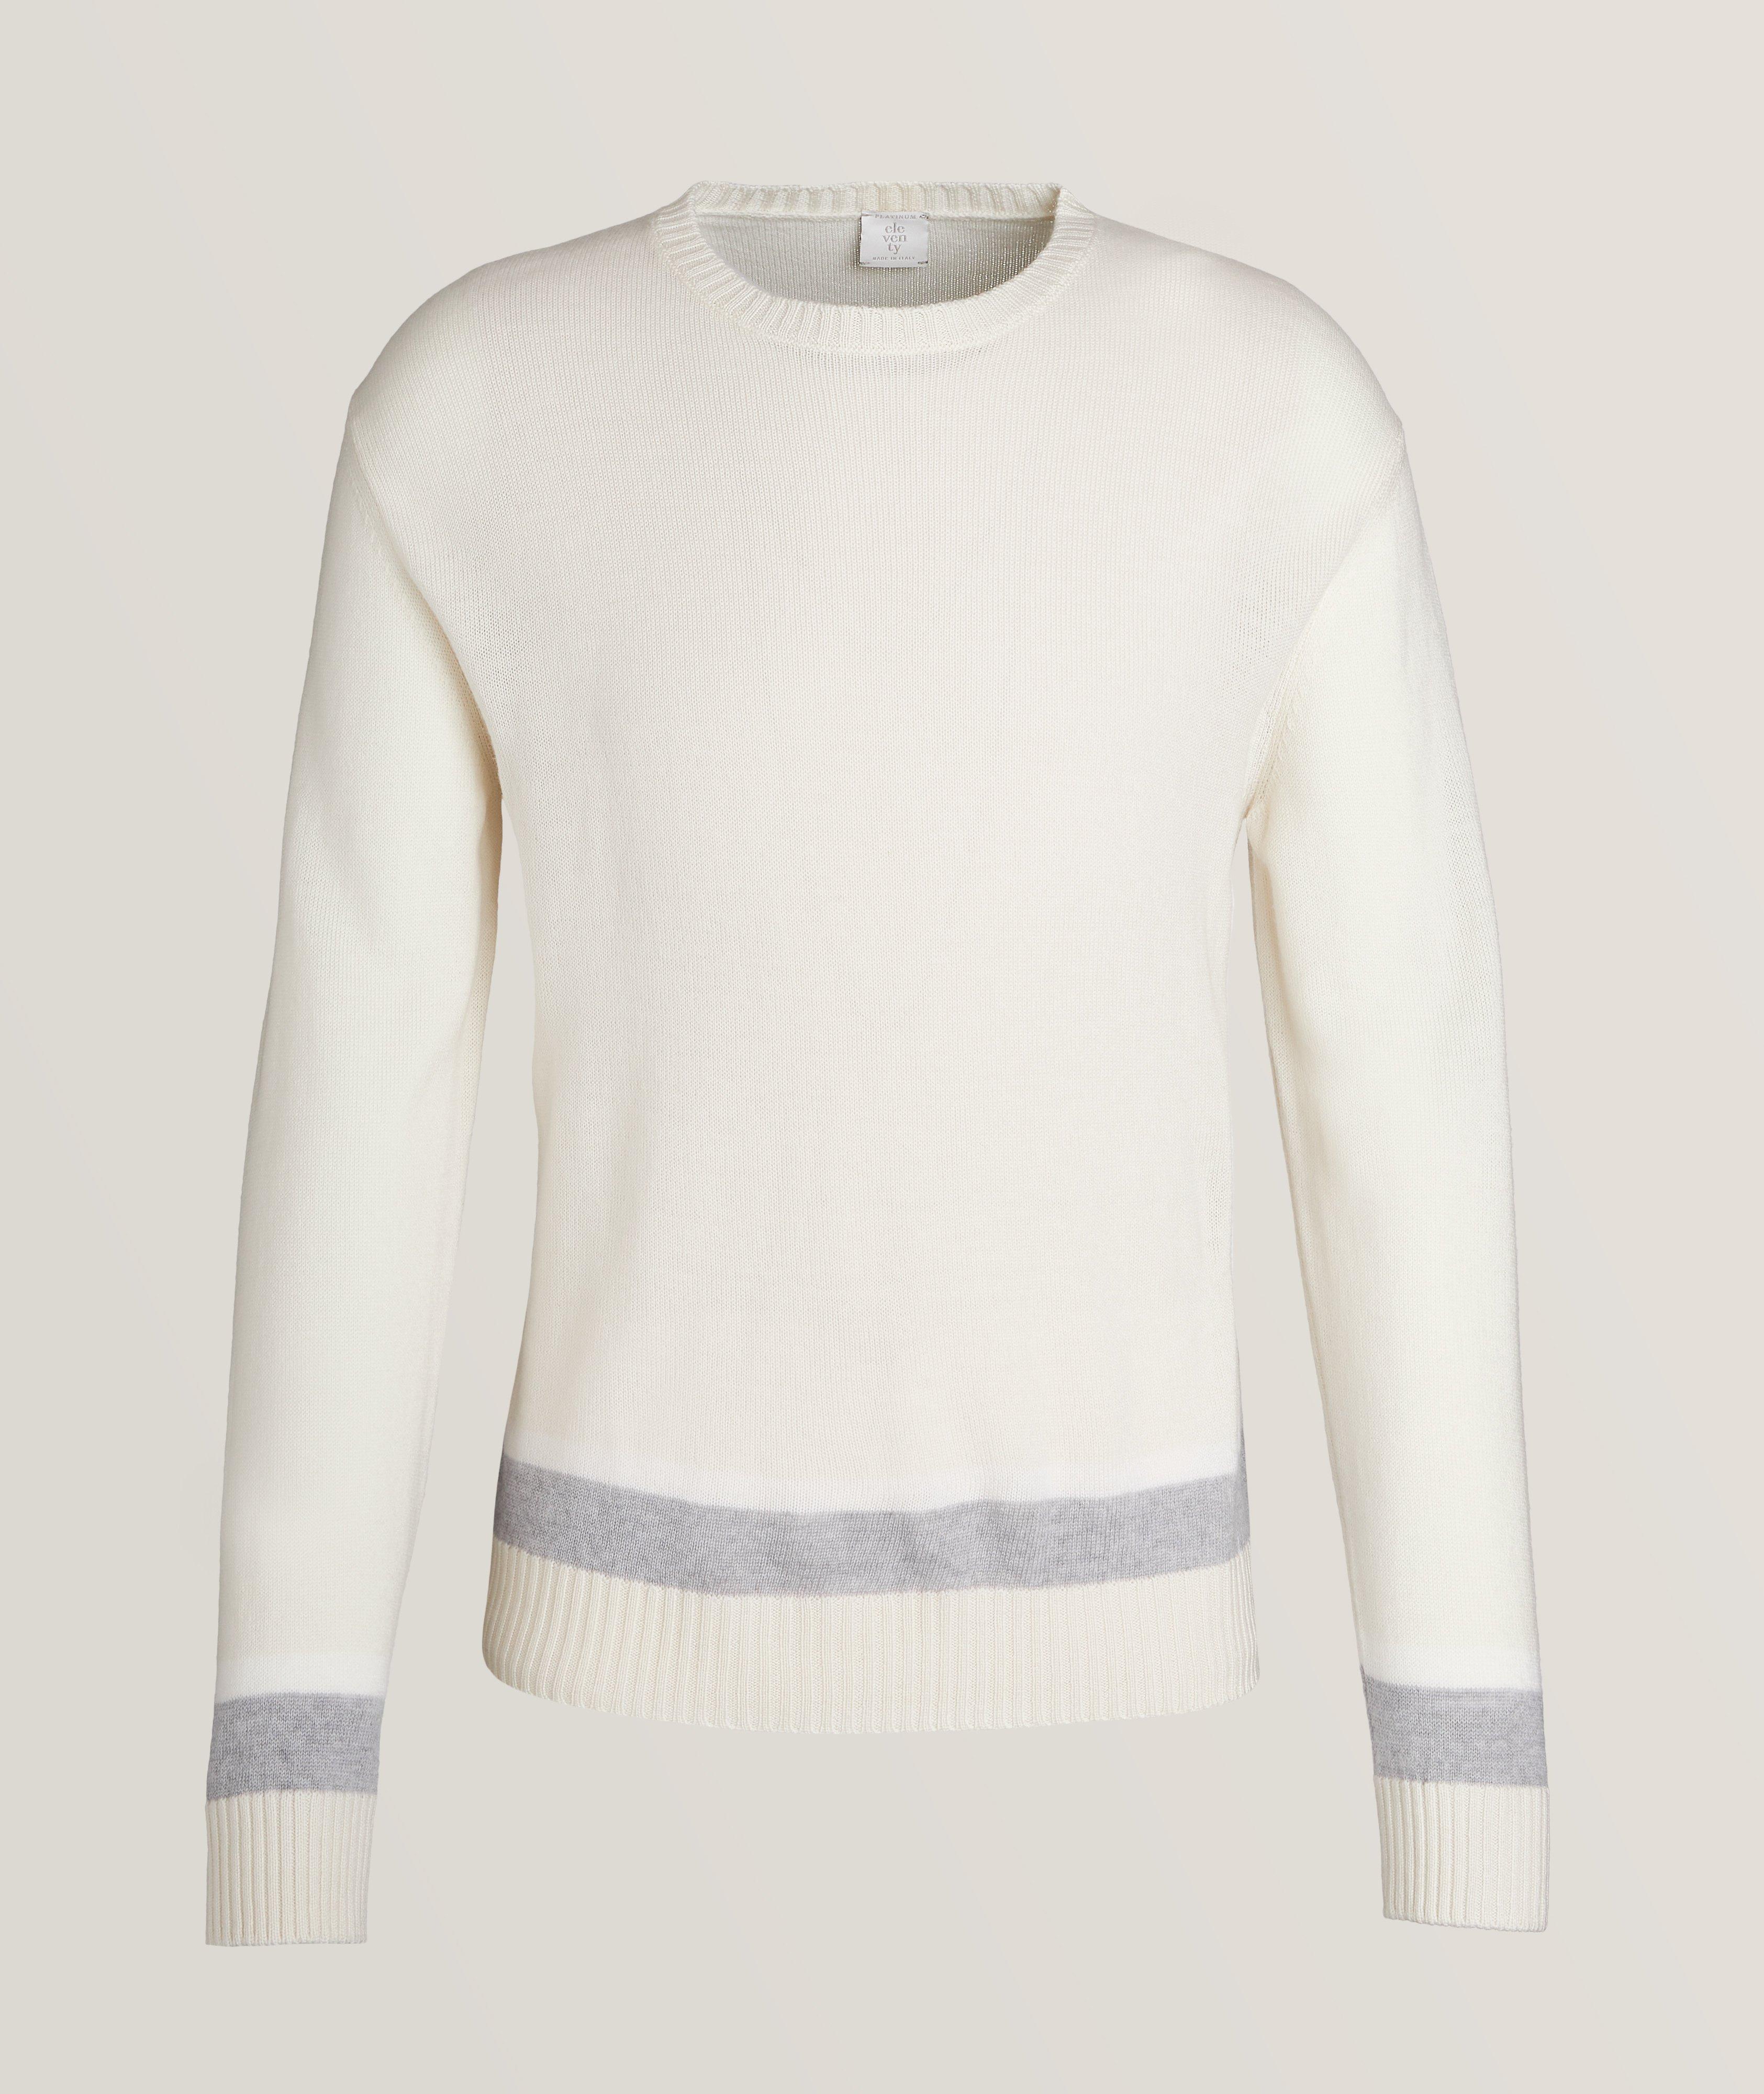 Contrast Stripe Wool Crewneck Sweater image 0